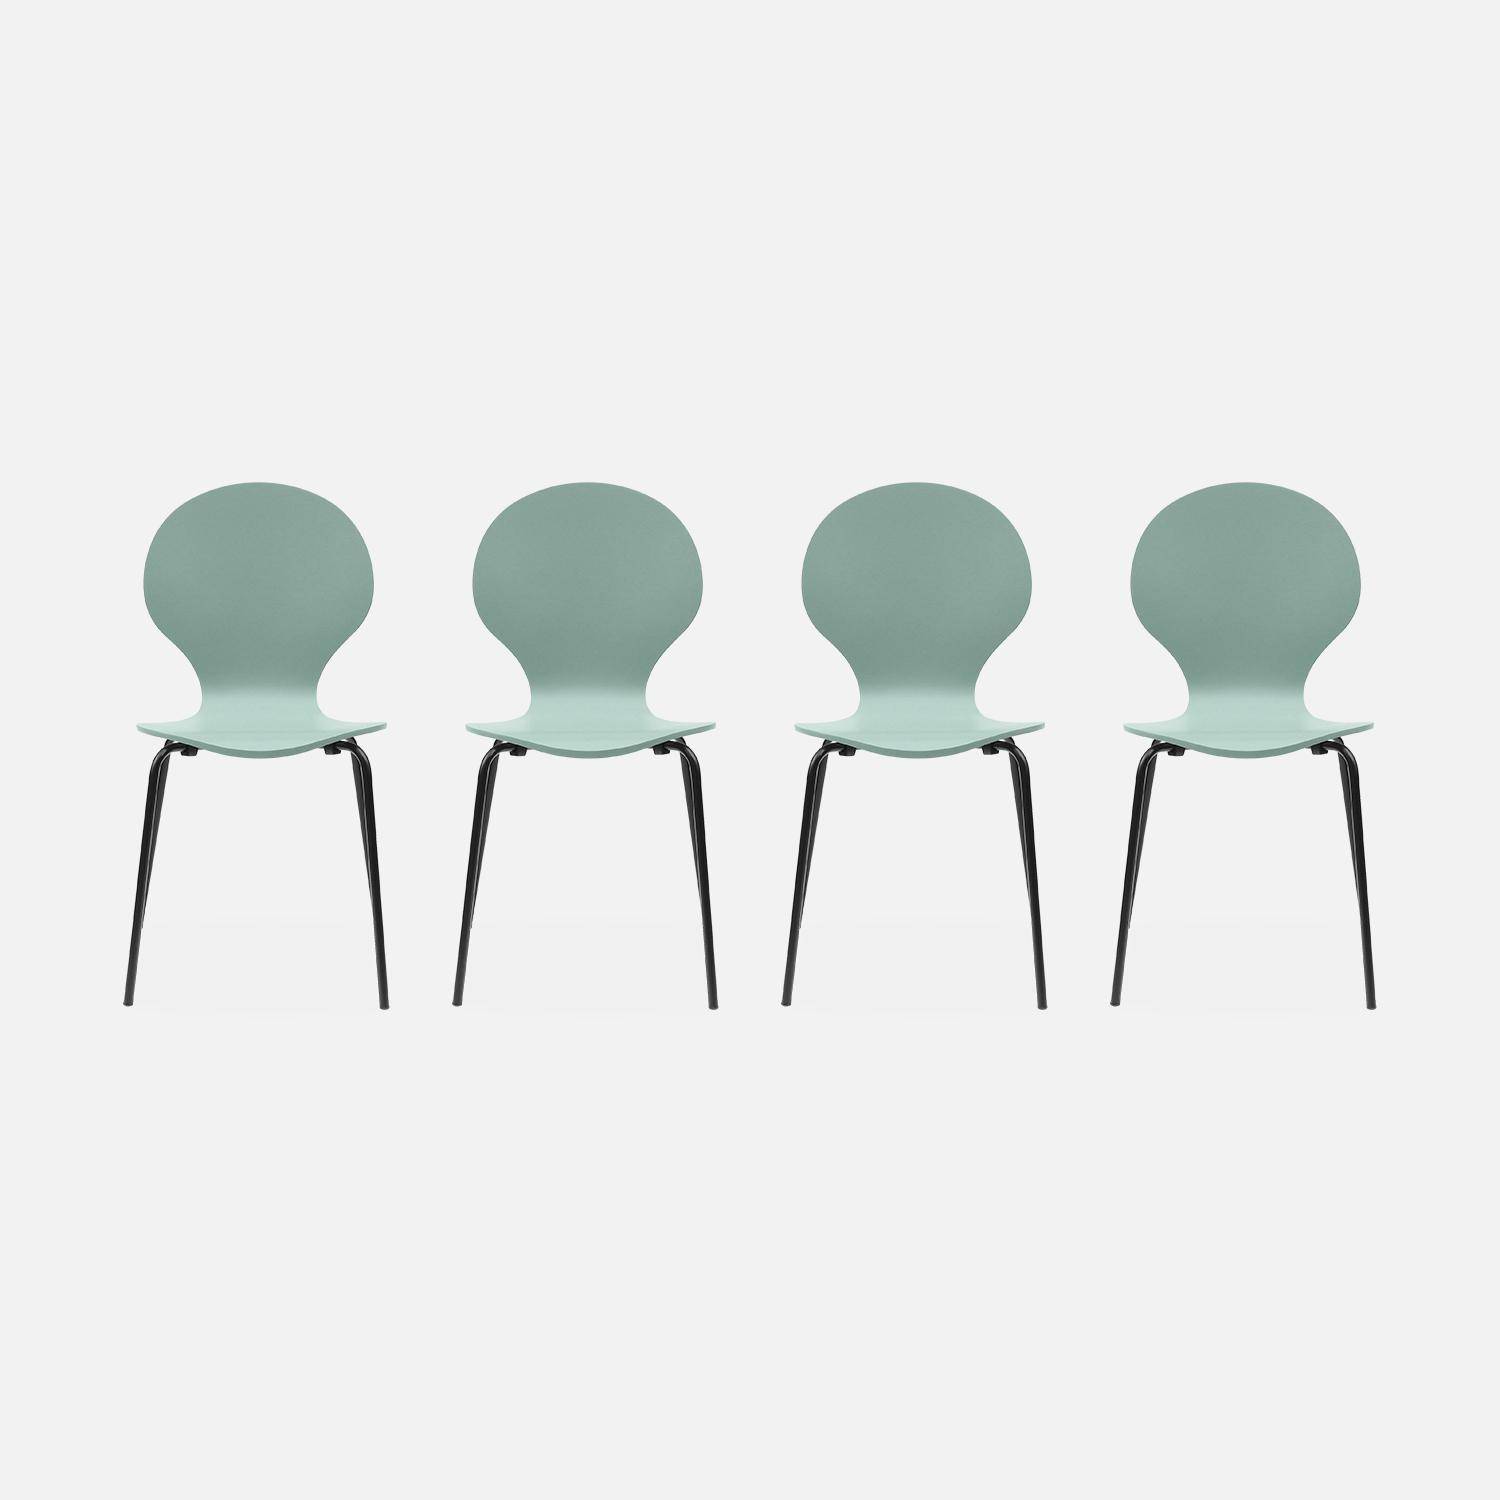 4er Set stapelbare Retro-Stühle in Seladongrün, Hevea-Holz und Sperrholz, Stahlbeine, Naomi, B 43 x T 48 x H 87cm,sweeek,Photo3